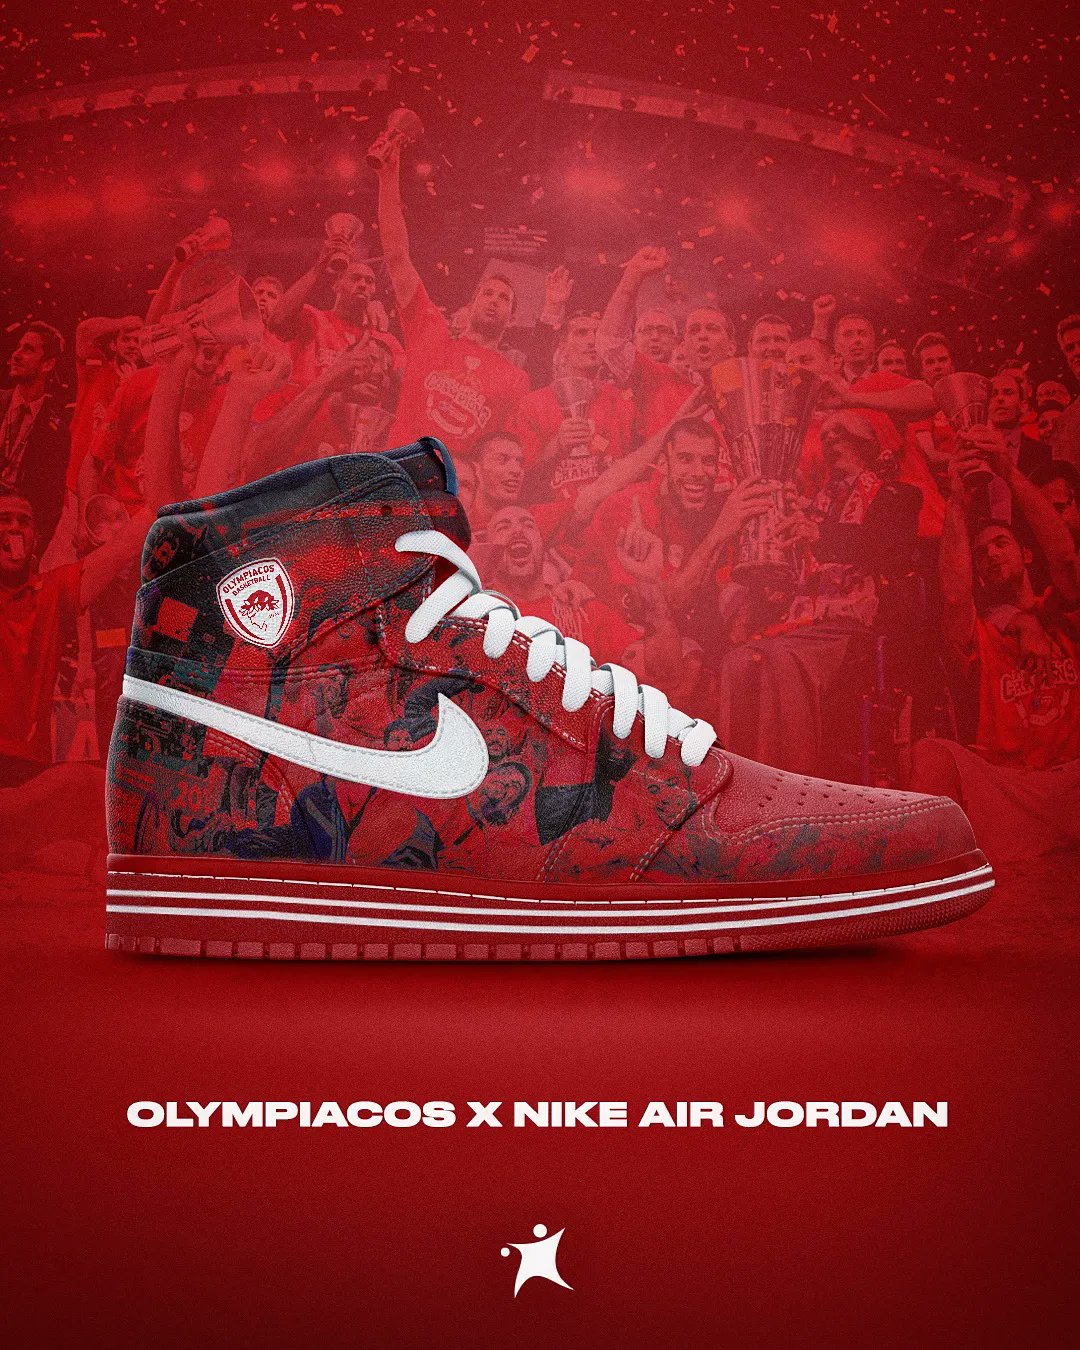 BasketNews on Twitter: "If teams had their Nike Jordan's - Olympiacos Would you cop? 🤑 https://t.co/kvKyZV34uR" / Twitter